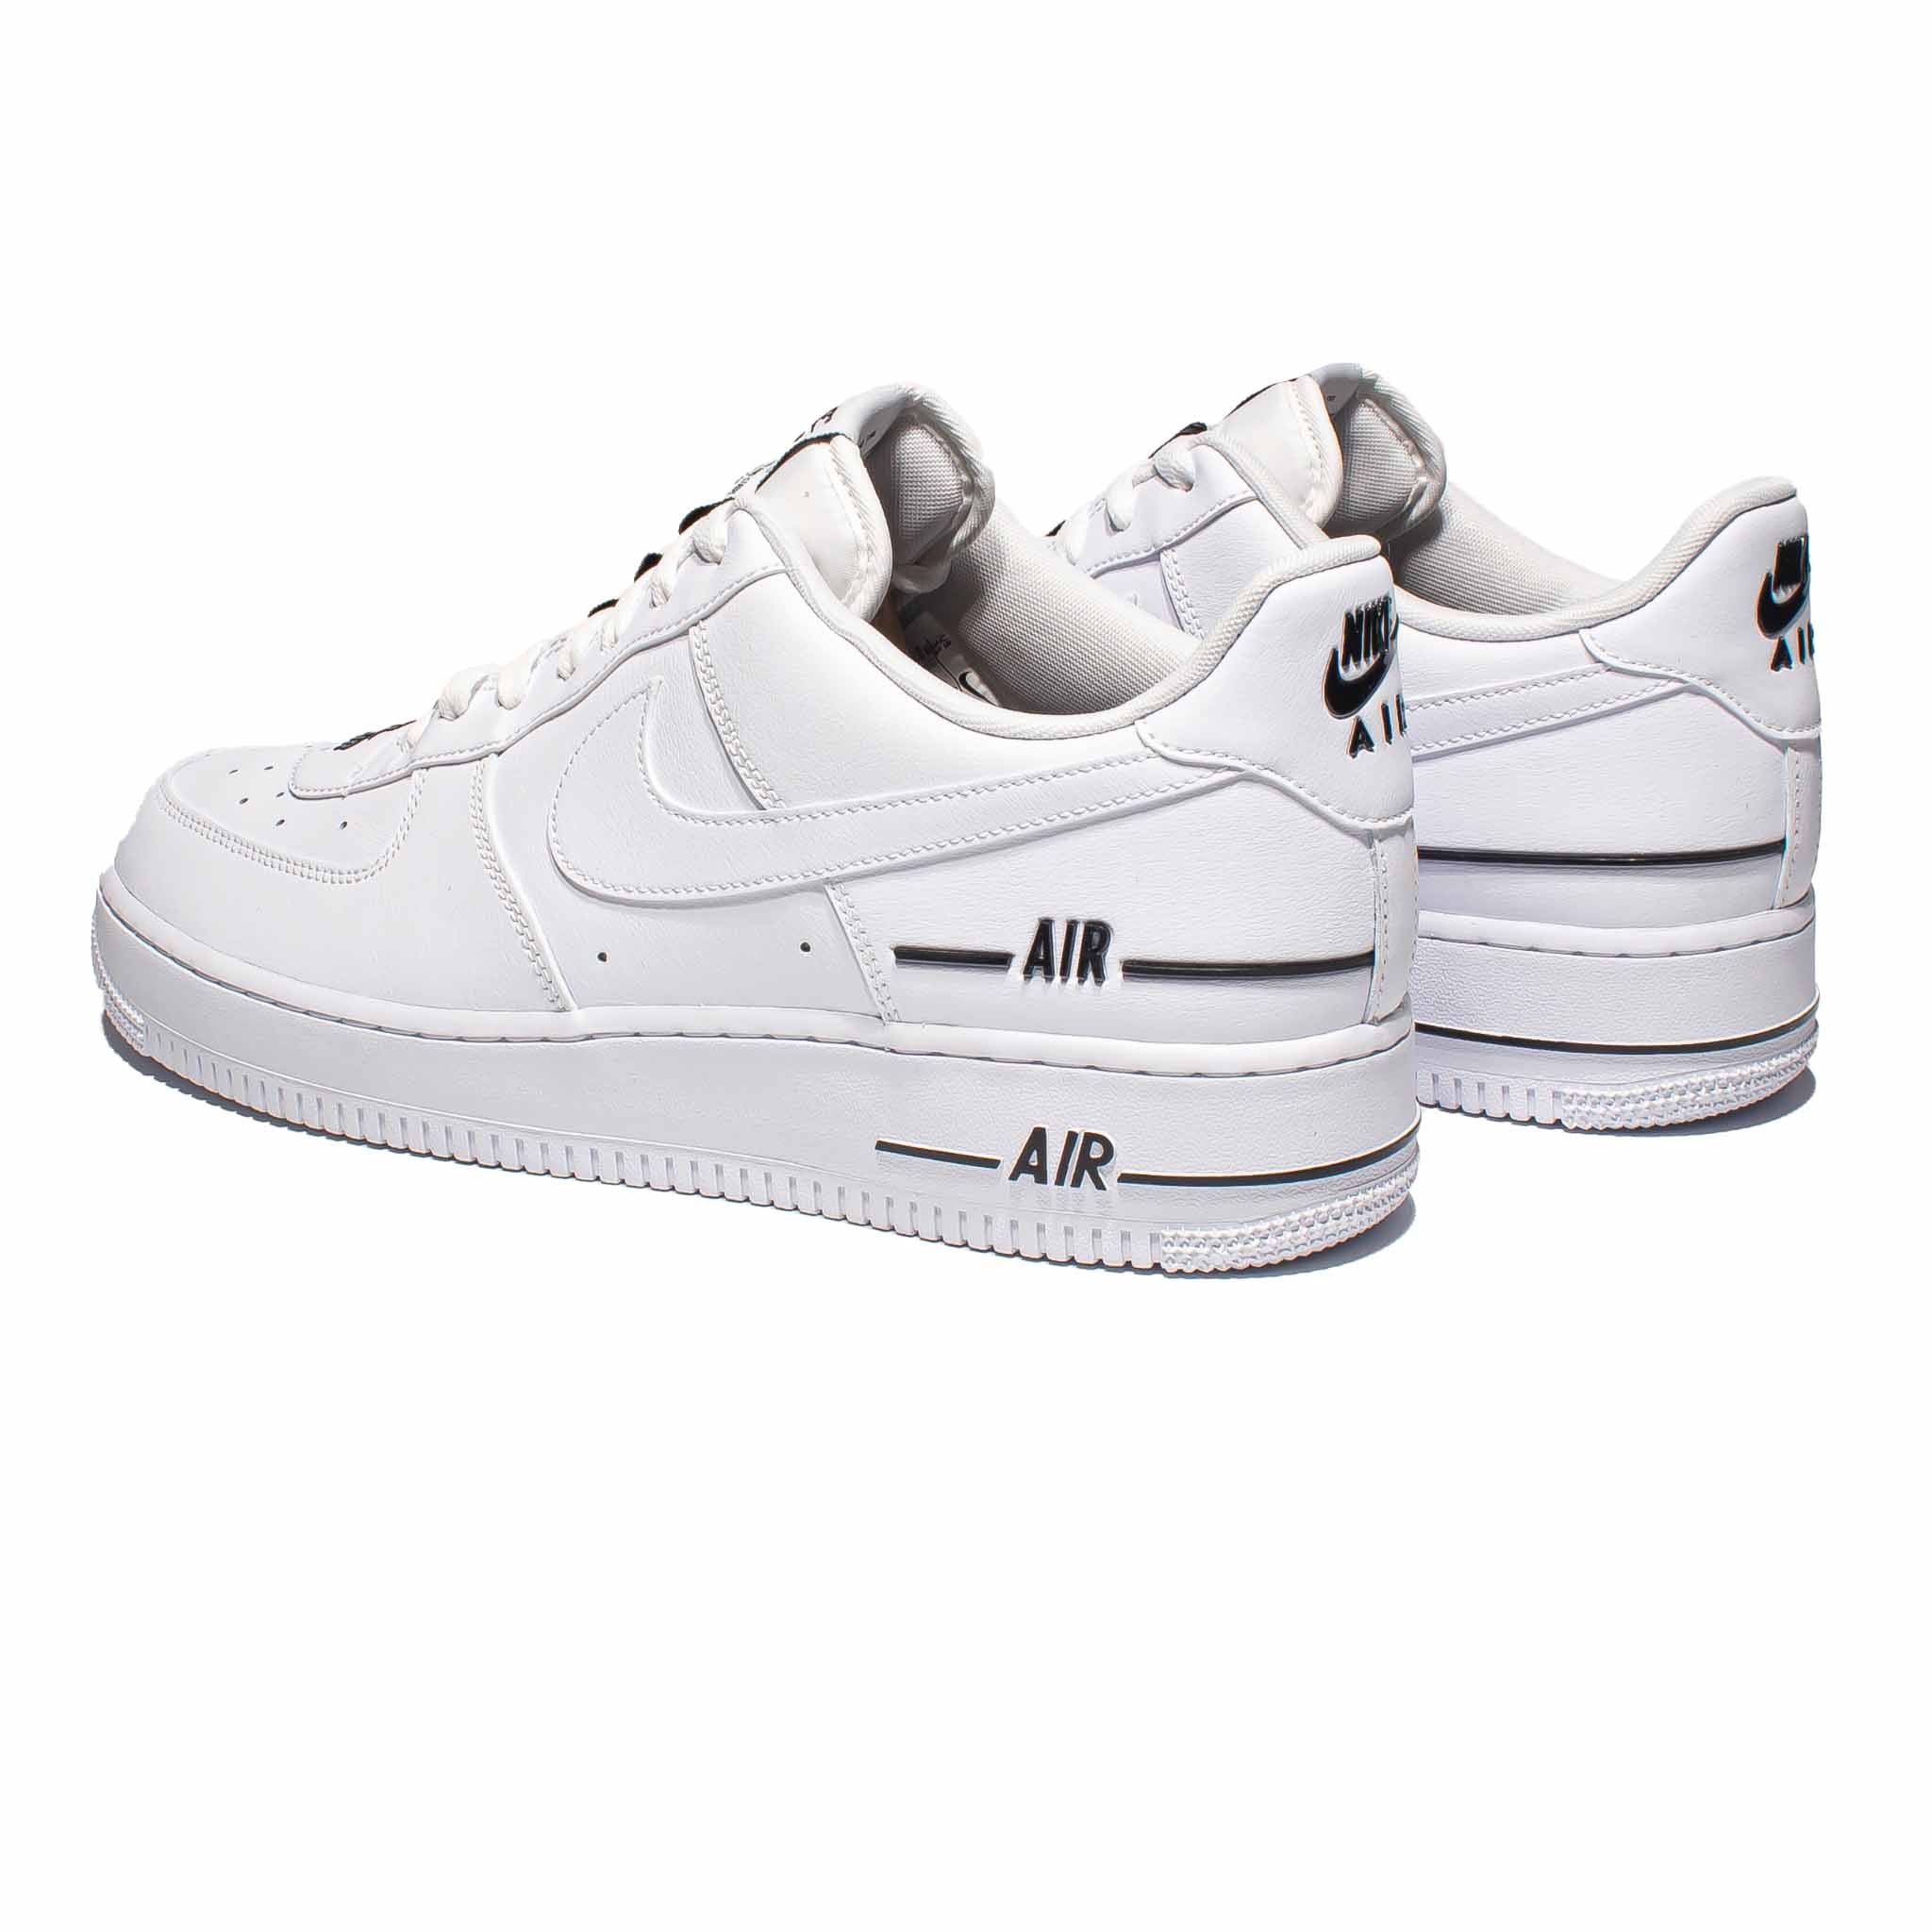 Nike Air Force 1 07 LV8 3 Double Air White Black Men Size 10 (CJ1379-100)